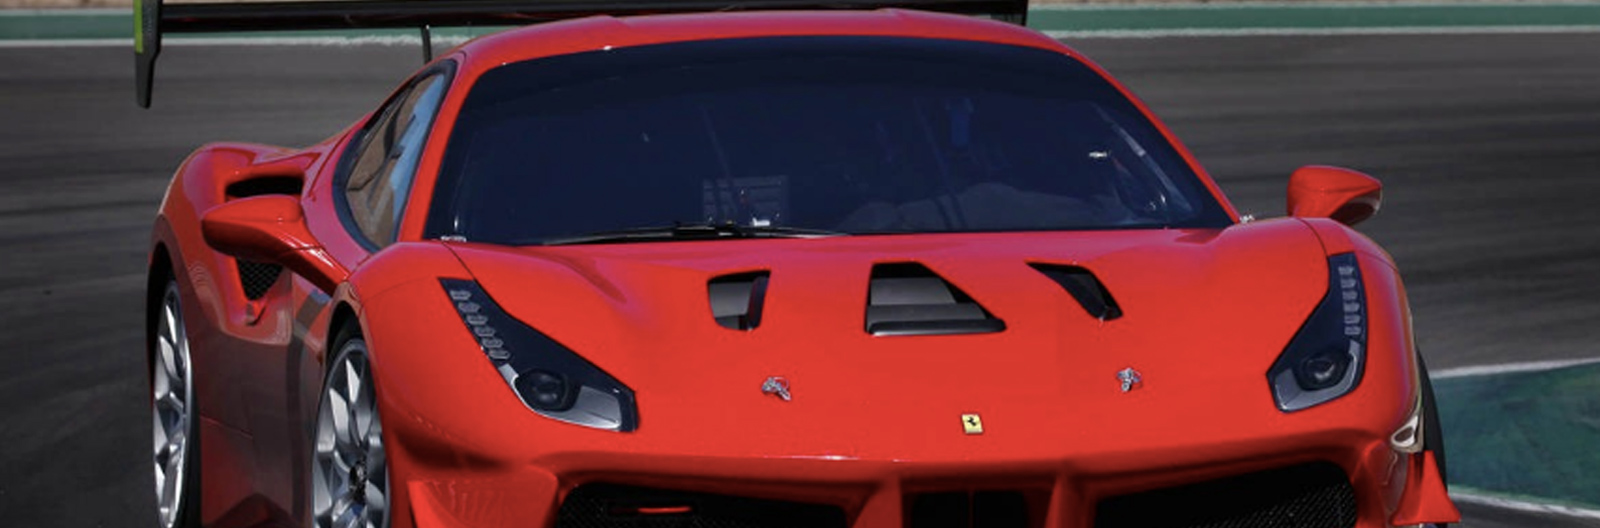 Prueba el Ferrari - Lamborghini en la pista.